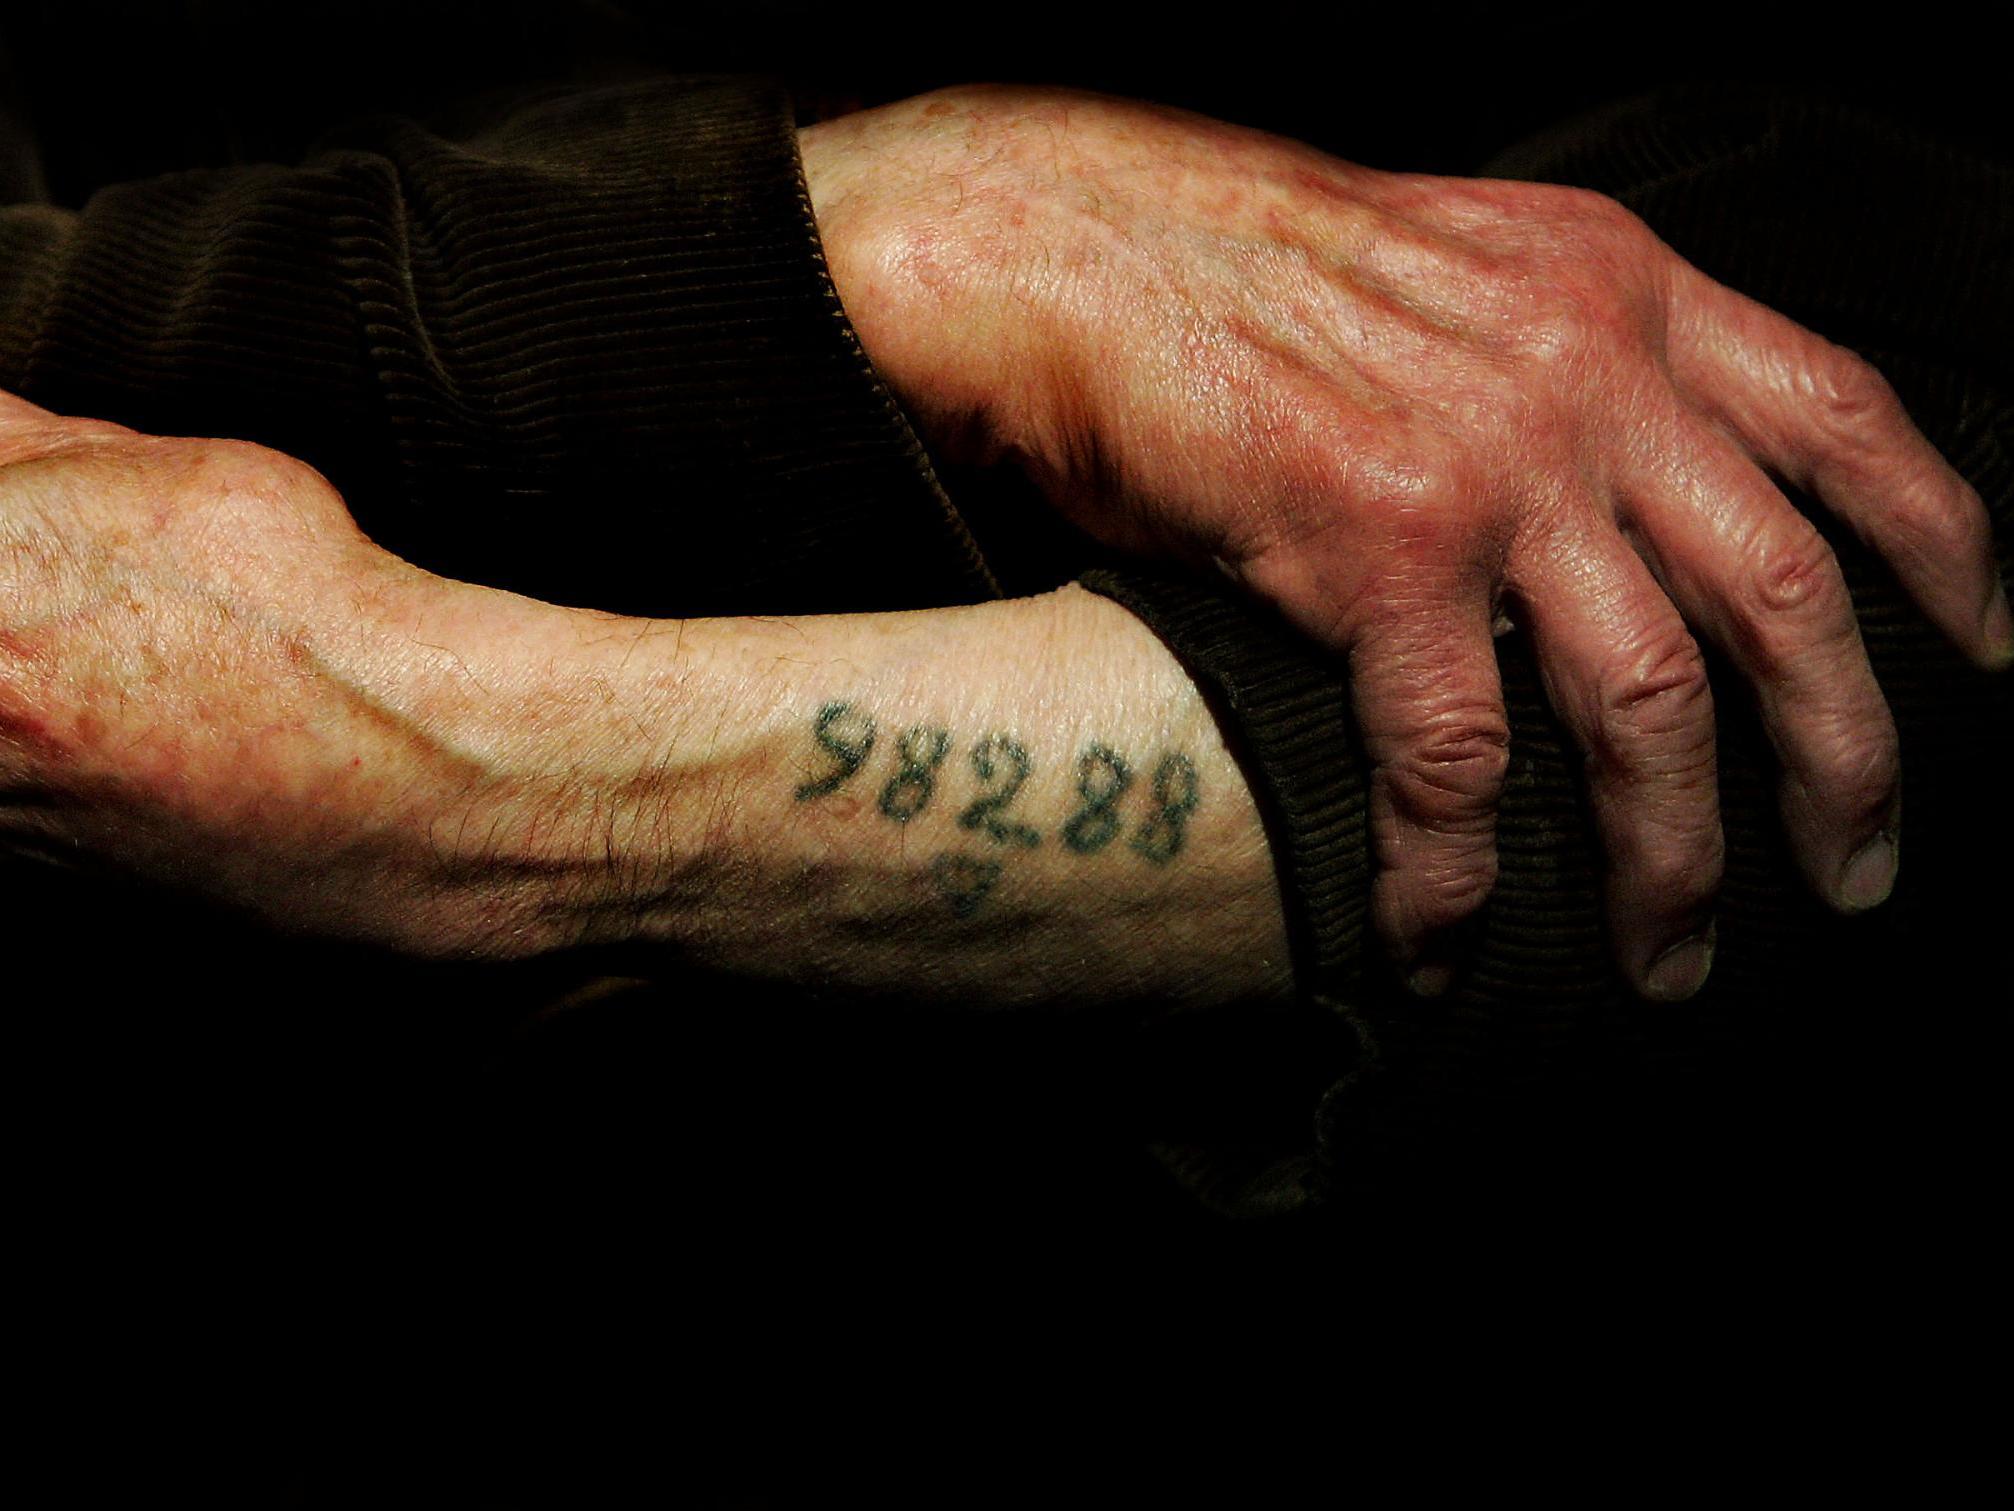 Auschwitz survivor Leon Greenman displays his number tattoo at the Jewish Museum in London, England